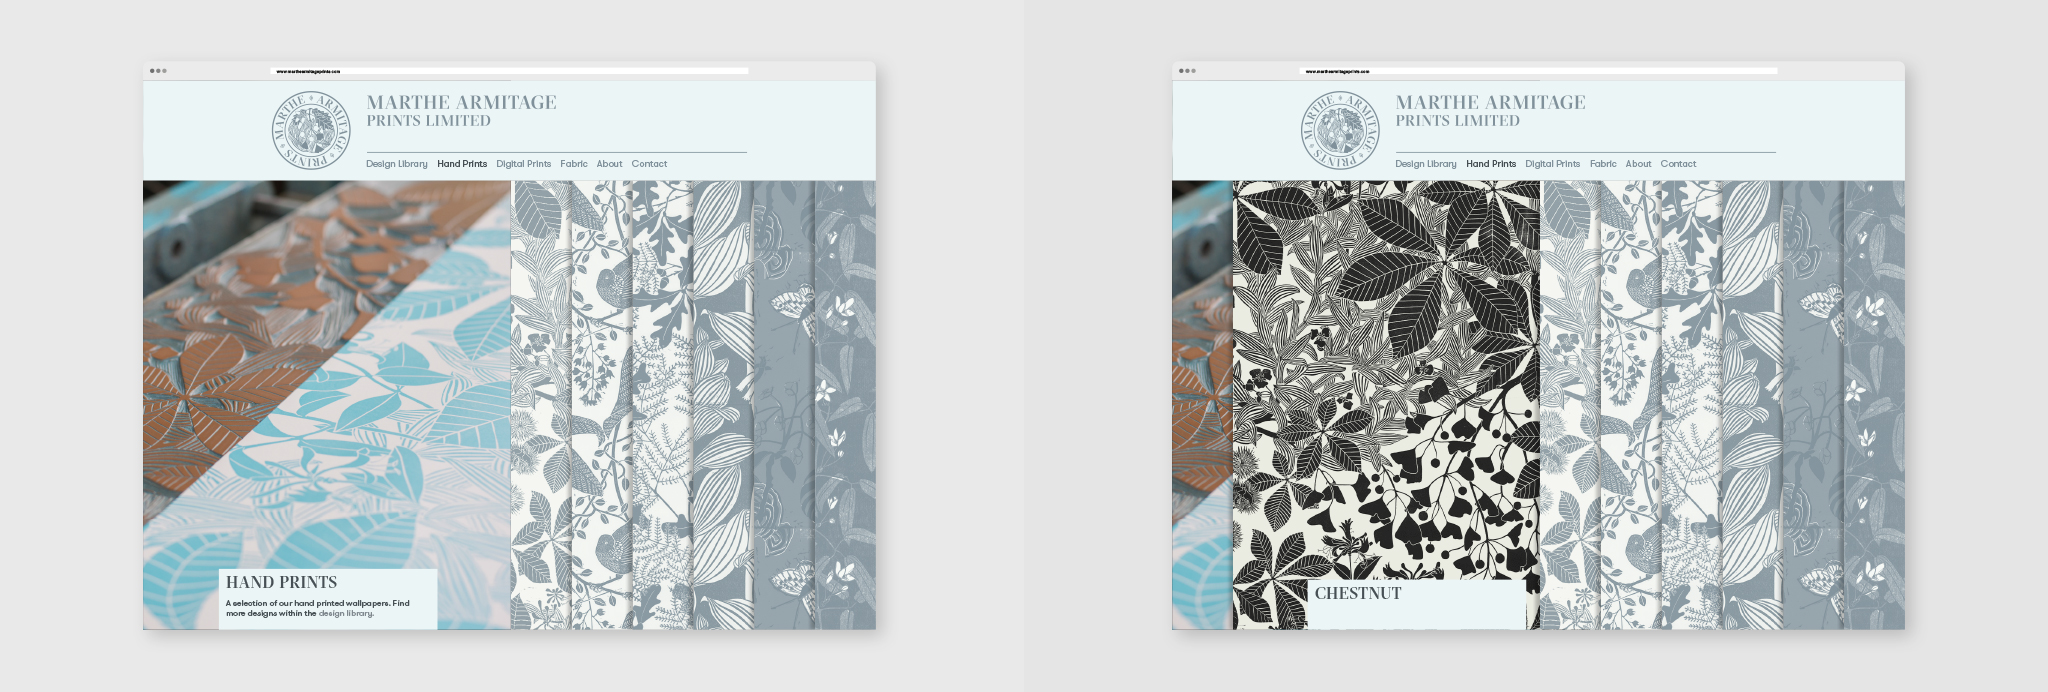 design for the hand prints website